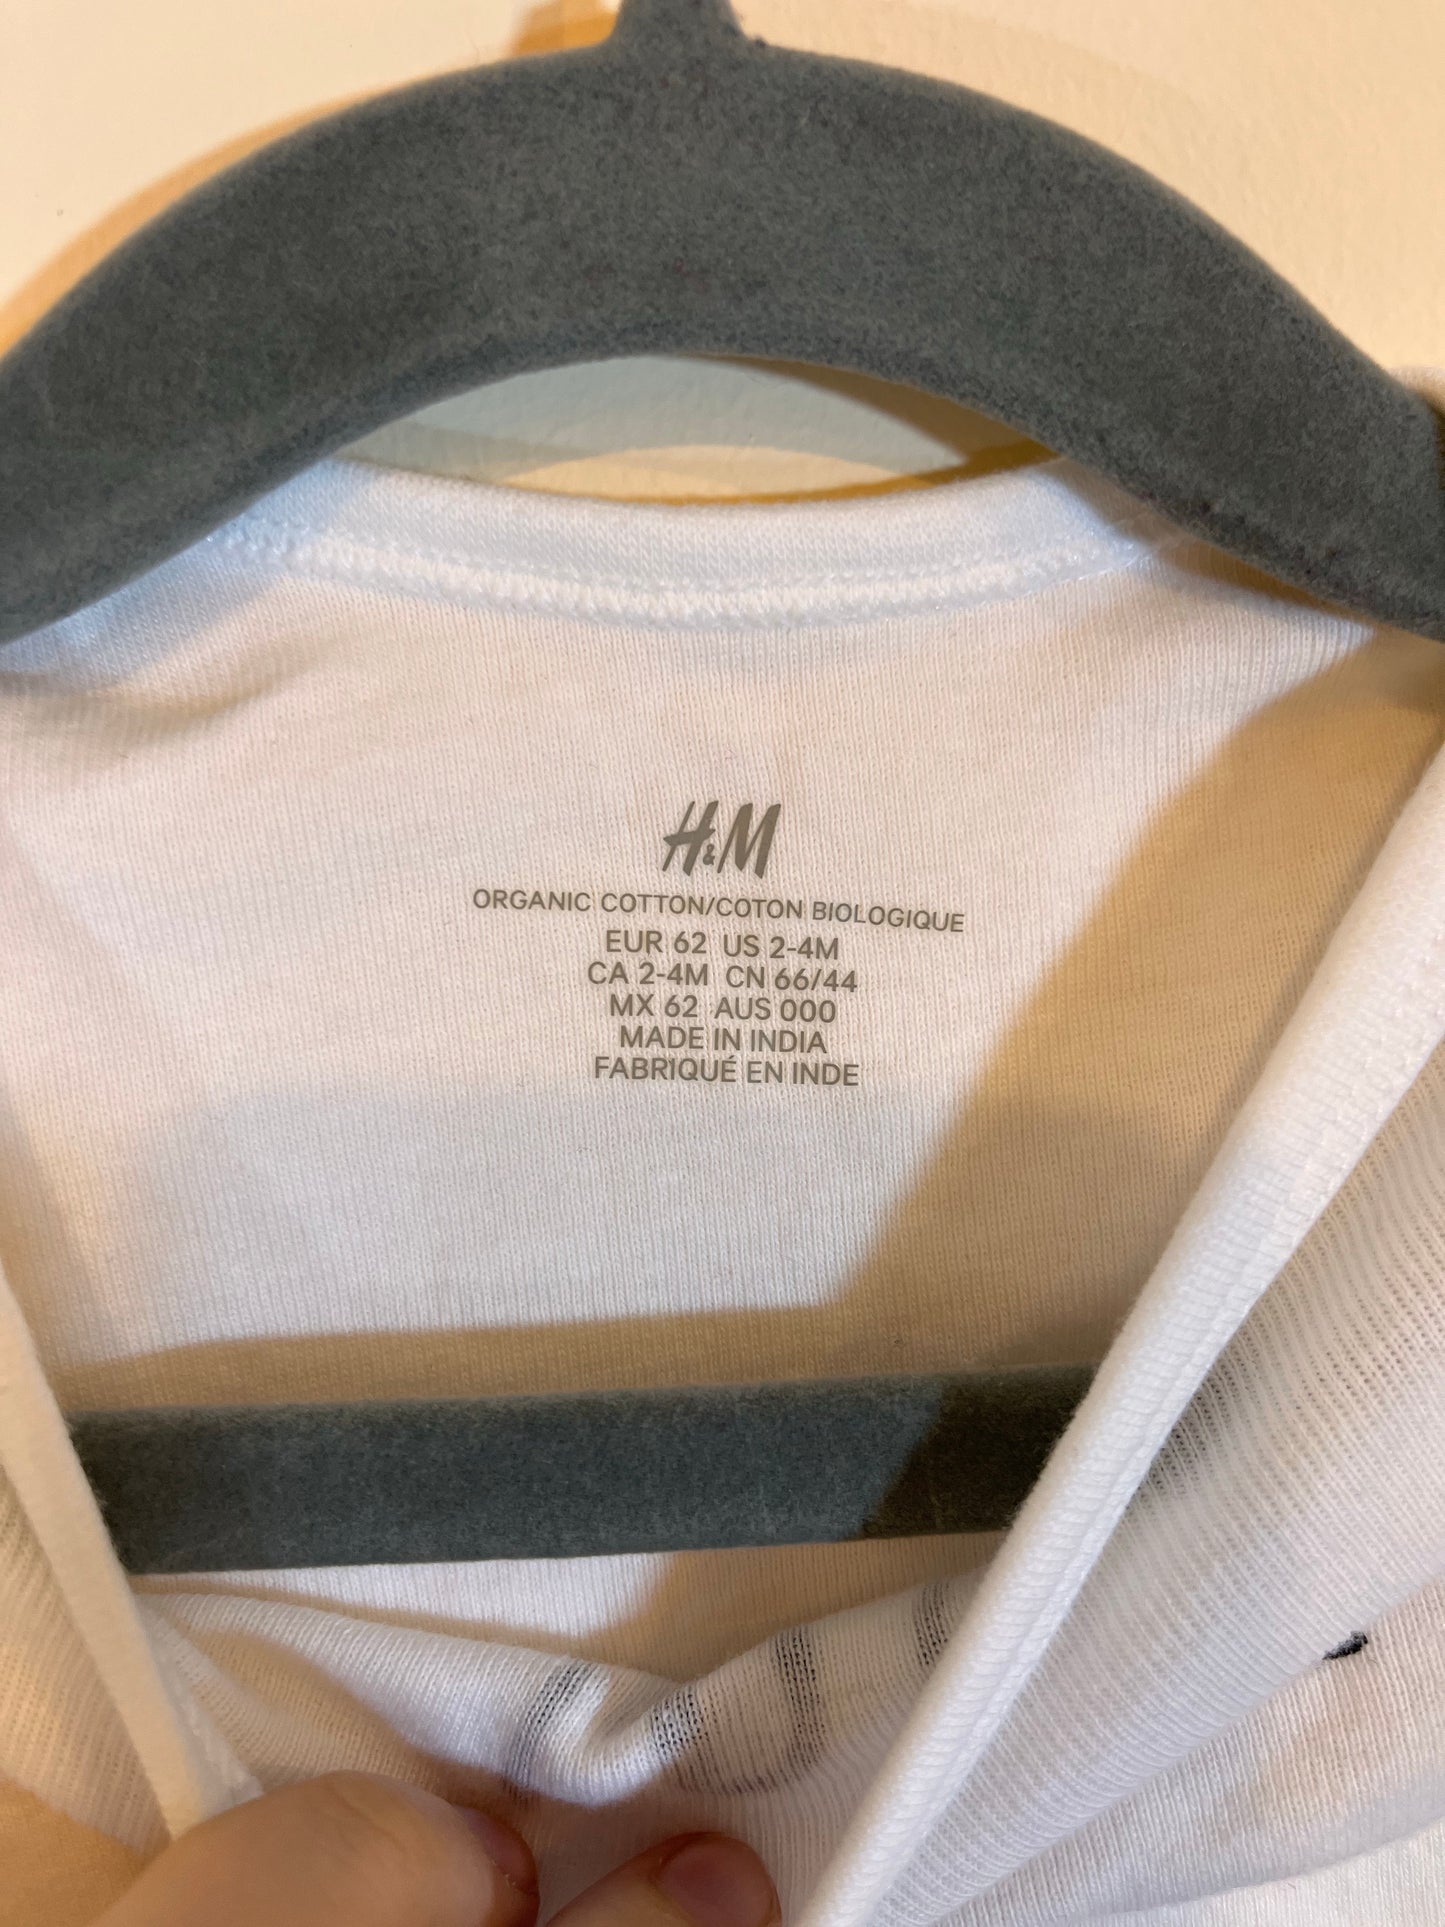 H&M "I Love My Daddy" T-Shirt (0-3)